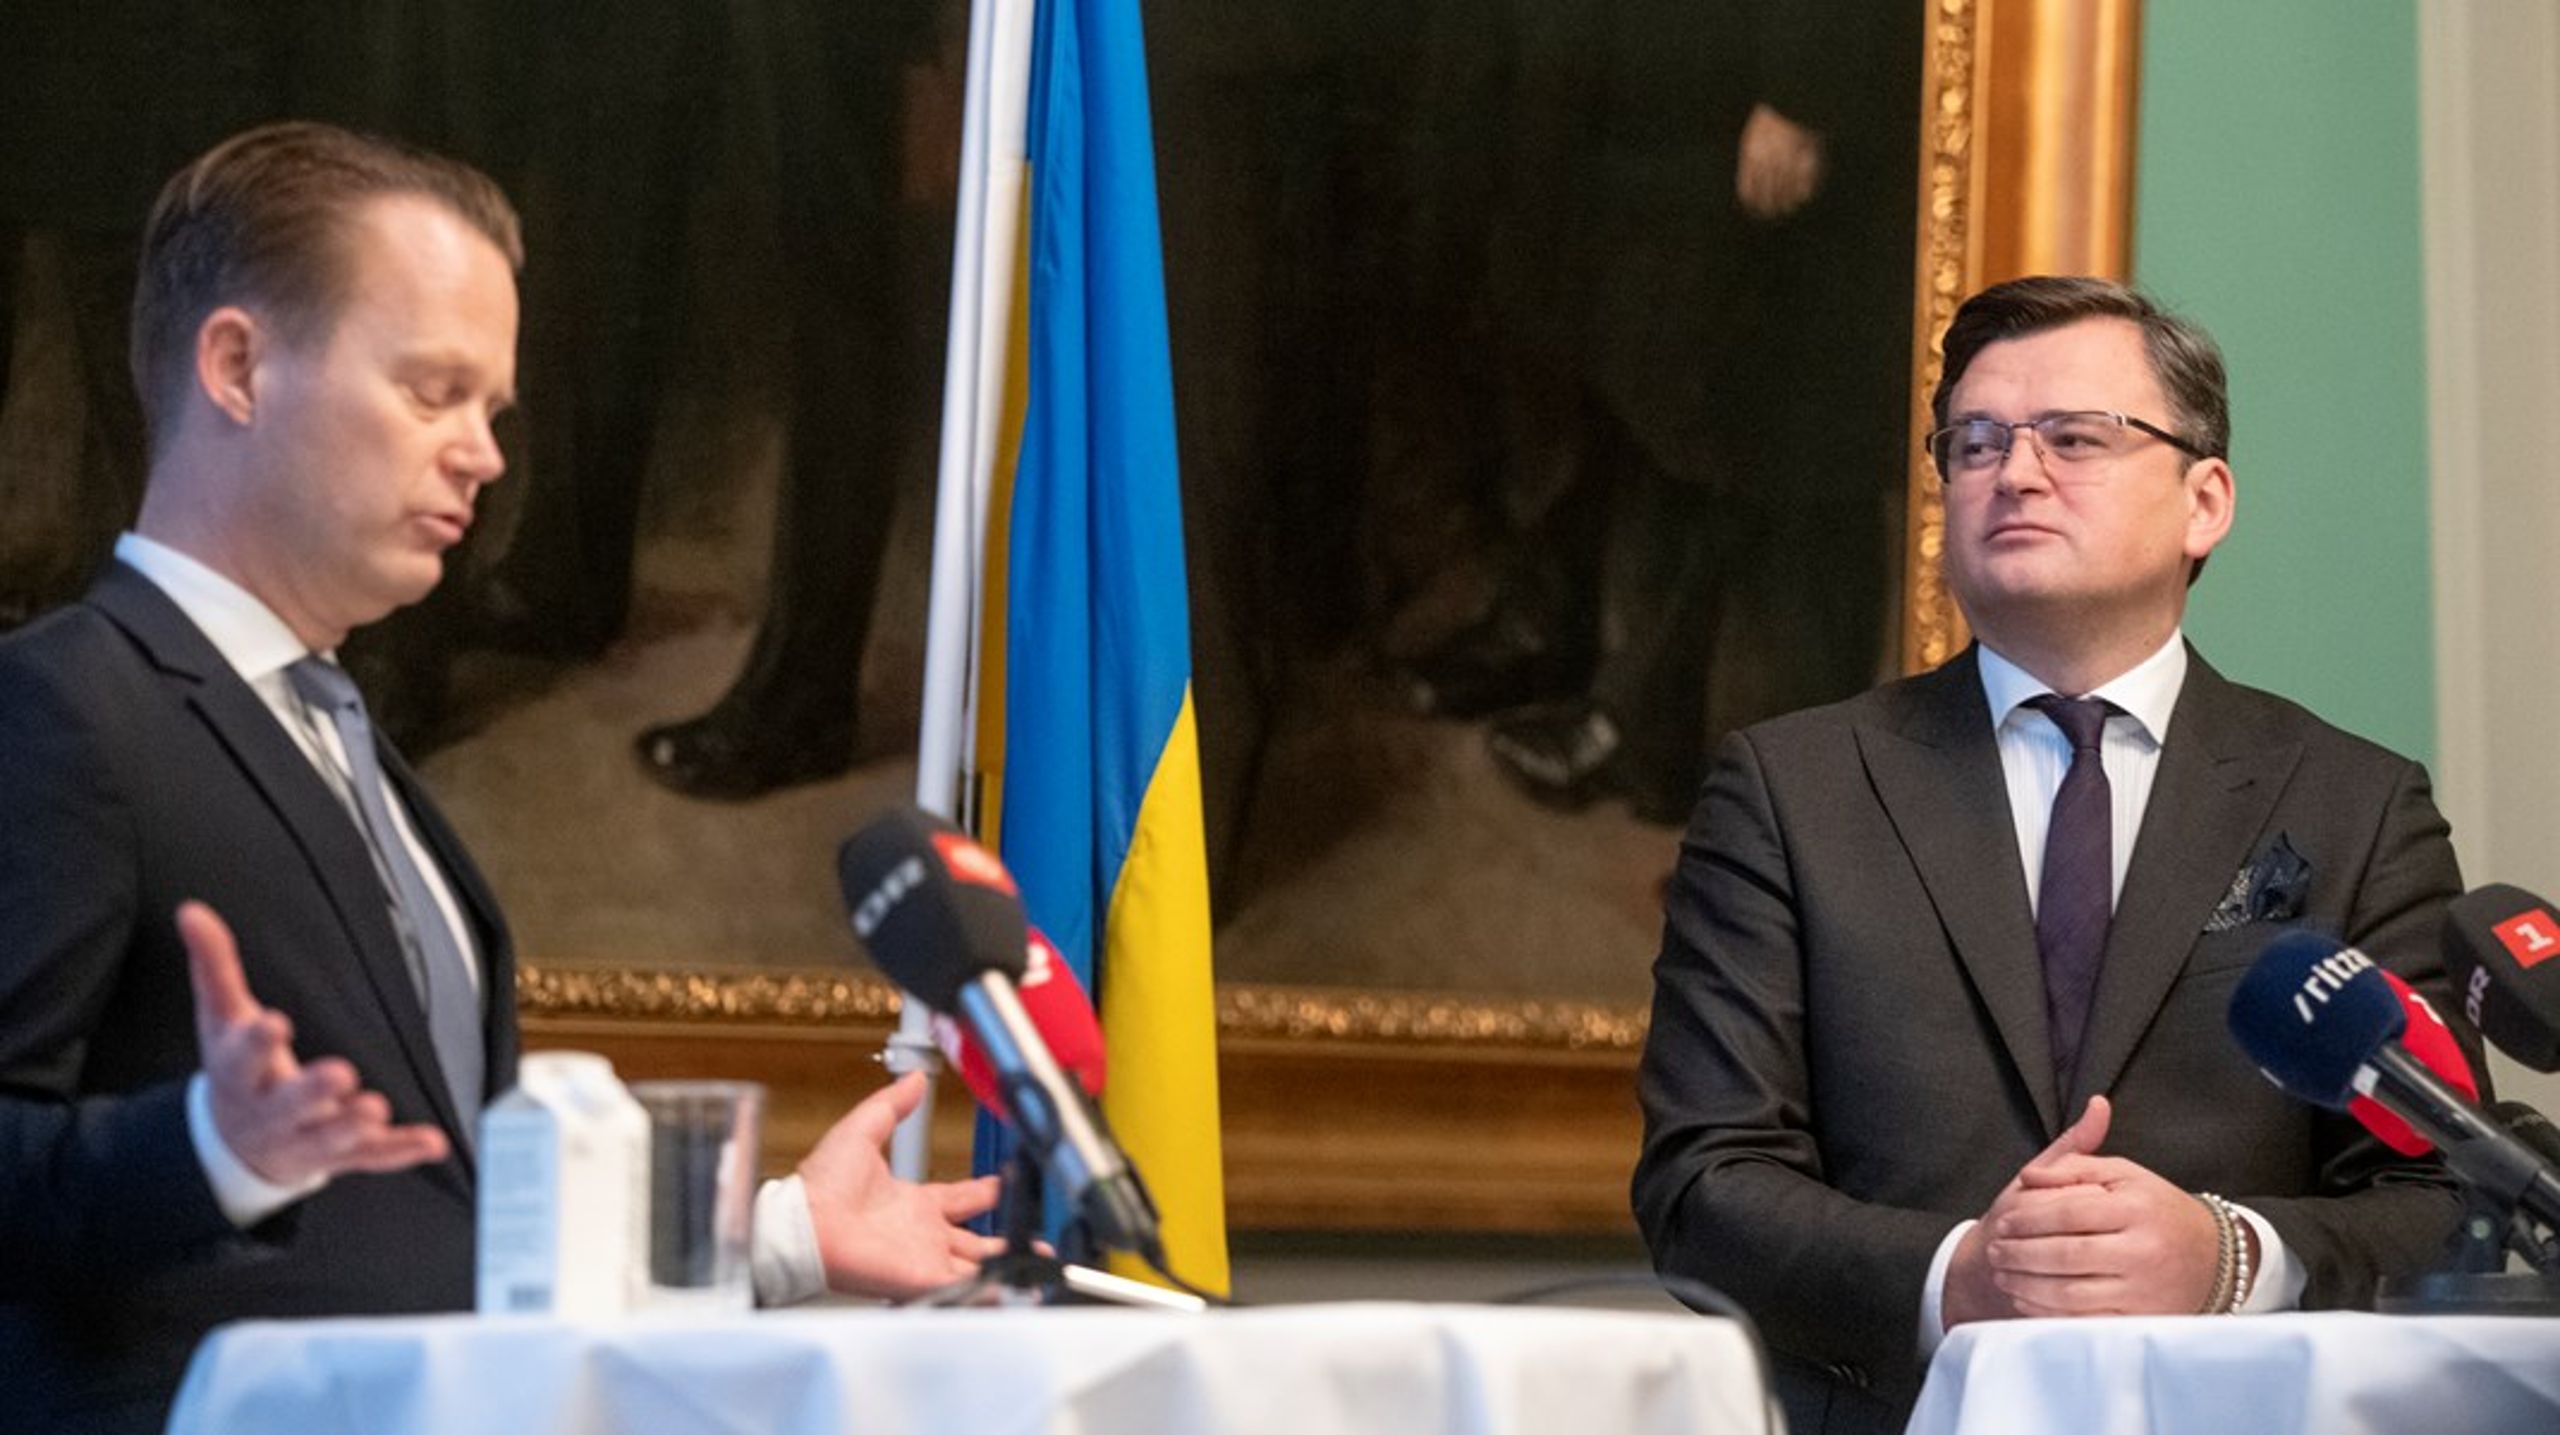 Den danske regering er parat med penge, men ikke med våben. Det var budskabet fra Danmarks udenrigsminister Jeppe Kofod (t.v.), da Ukraines udenrigsminister Dmytro Kuleba (t.h.) torsdag besøgte Danmark.